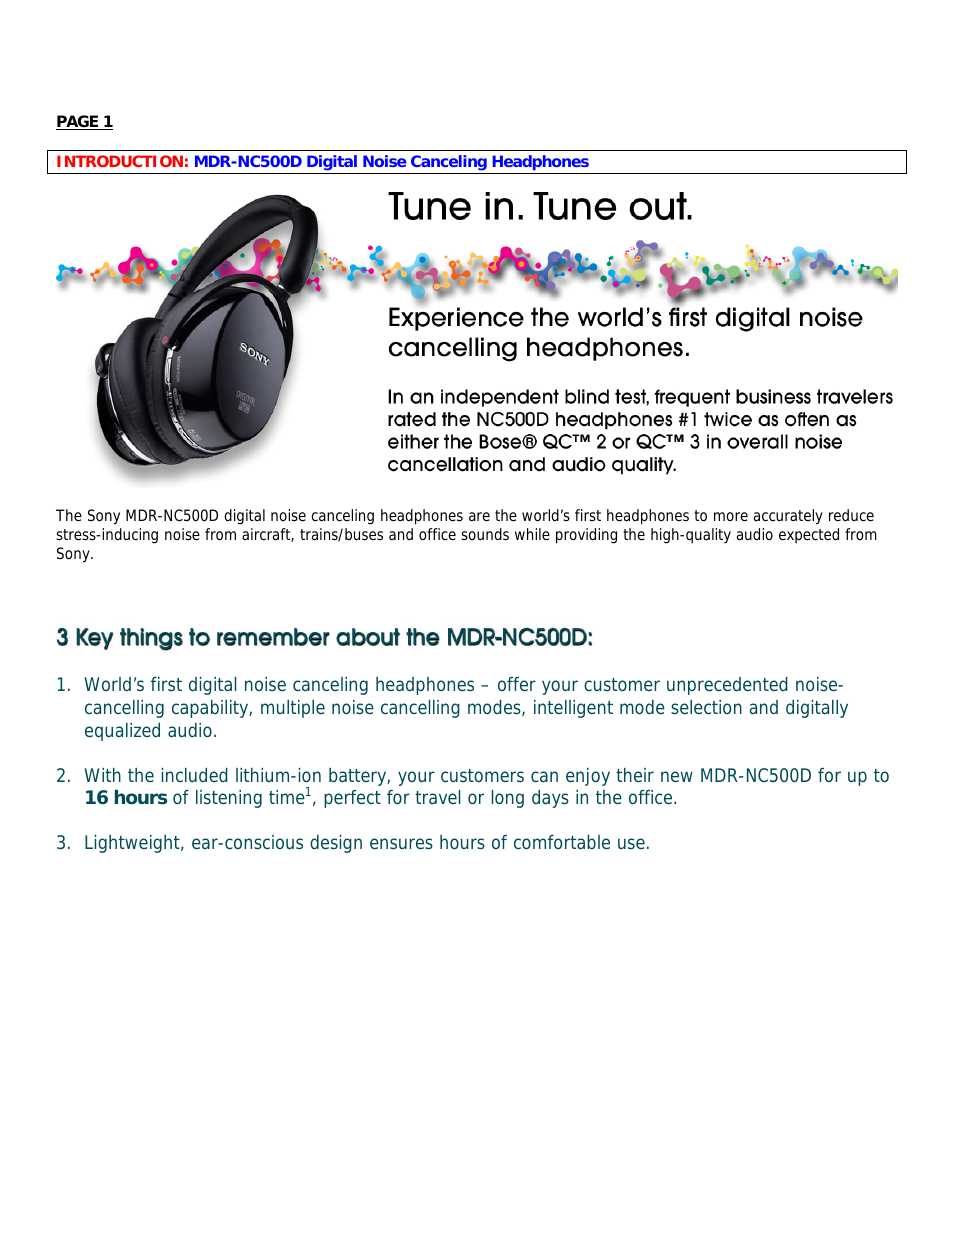 DIGITAL NOISE CANCELING HEADPHONES MDR-NC500D